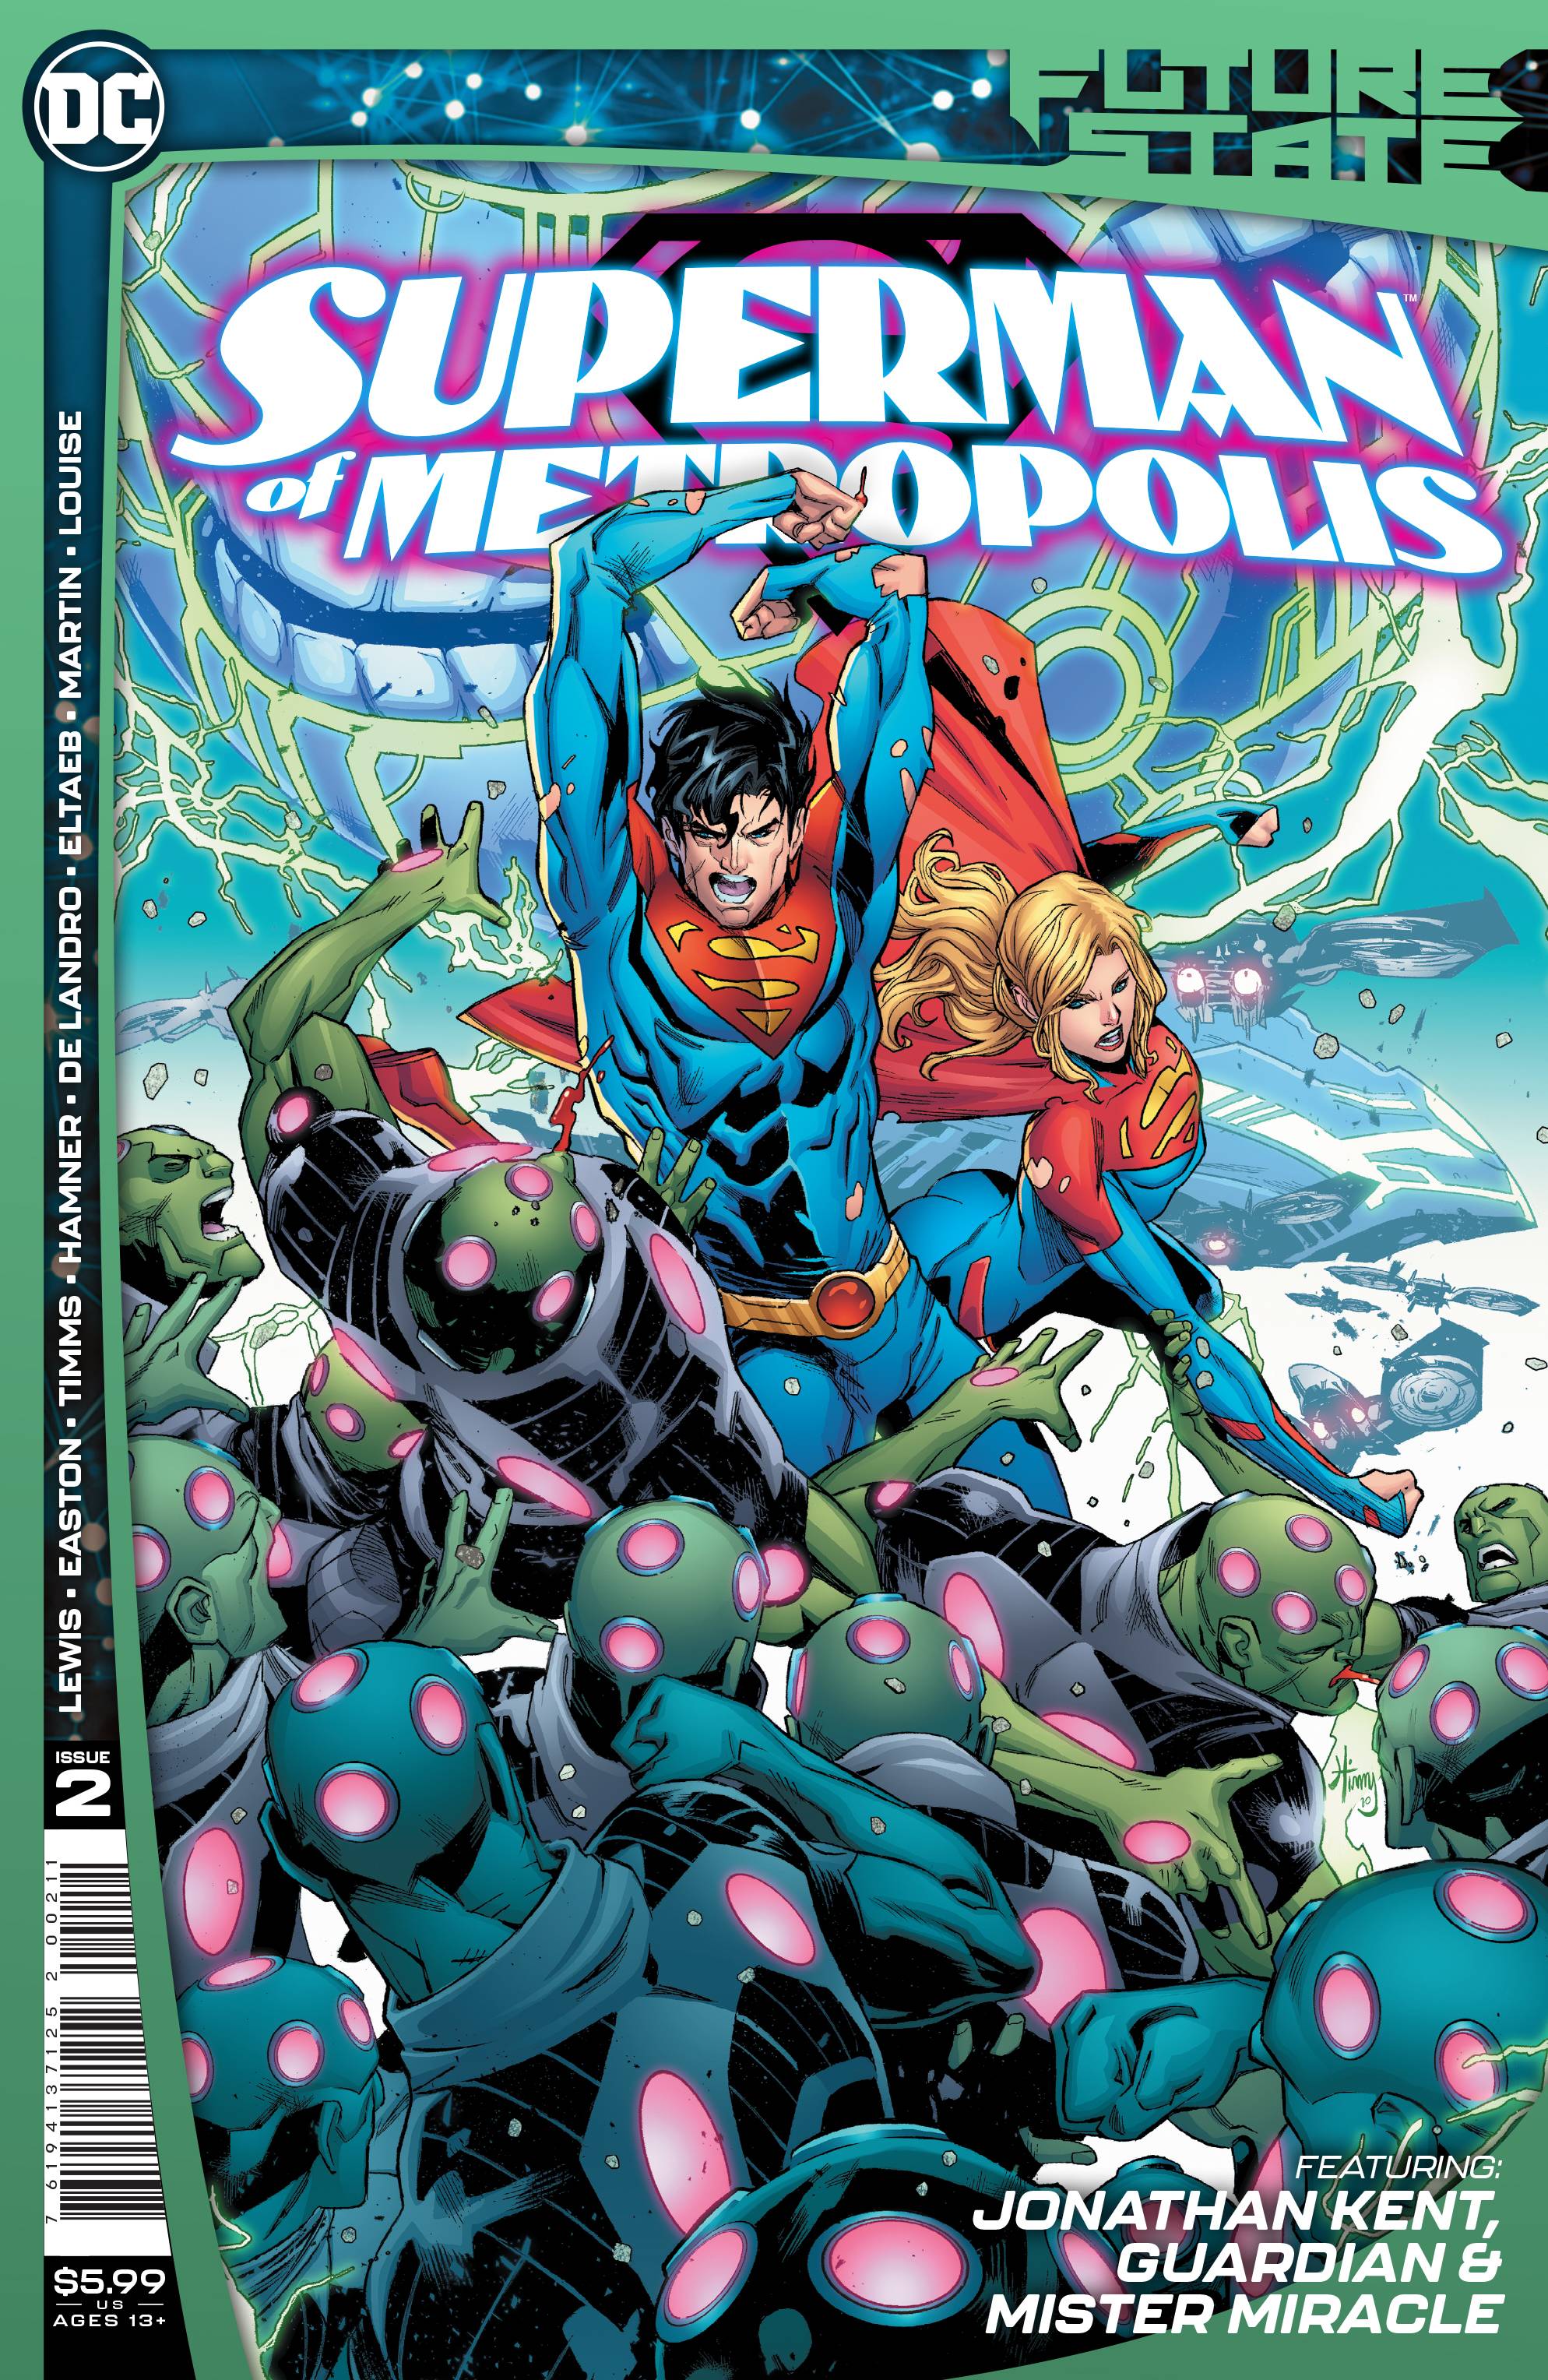 FUTURE STATE SUPERMAN OF METROPOLIS #2